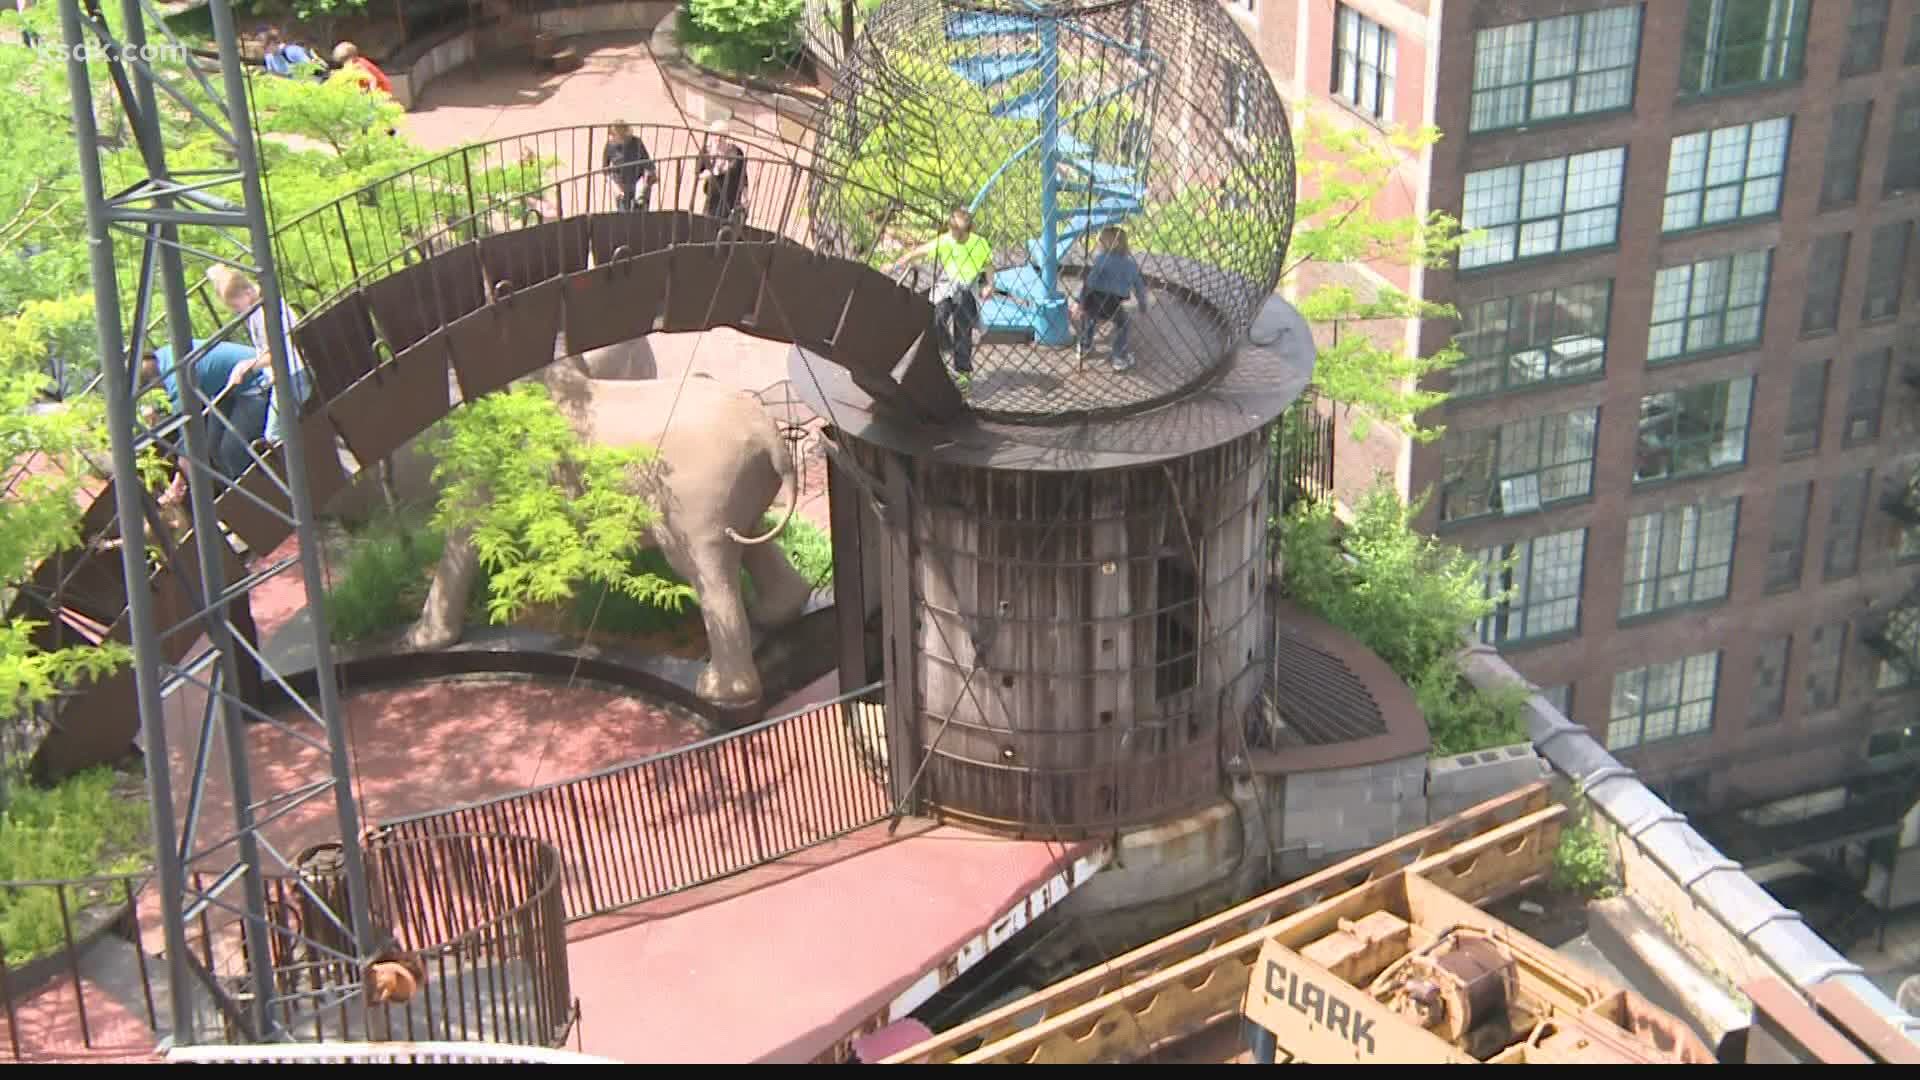 St. Louis attractions: City Museum reopening | ksdk.com